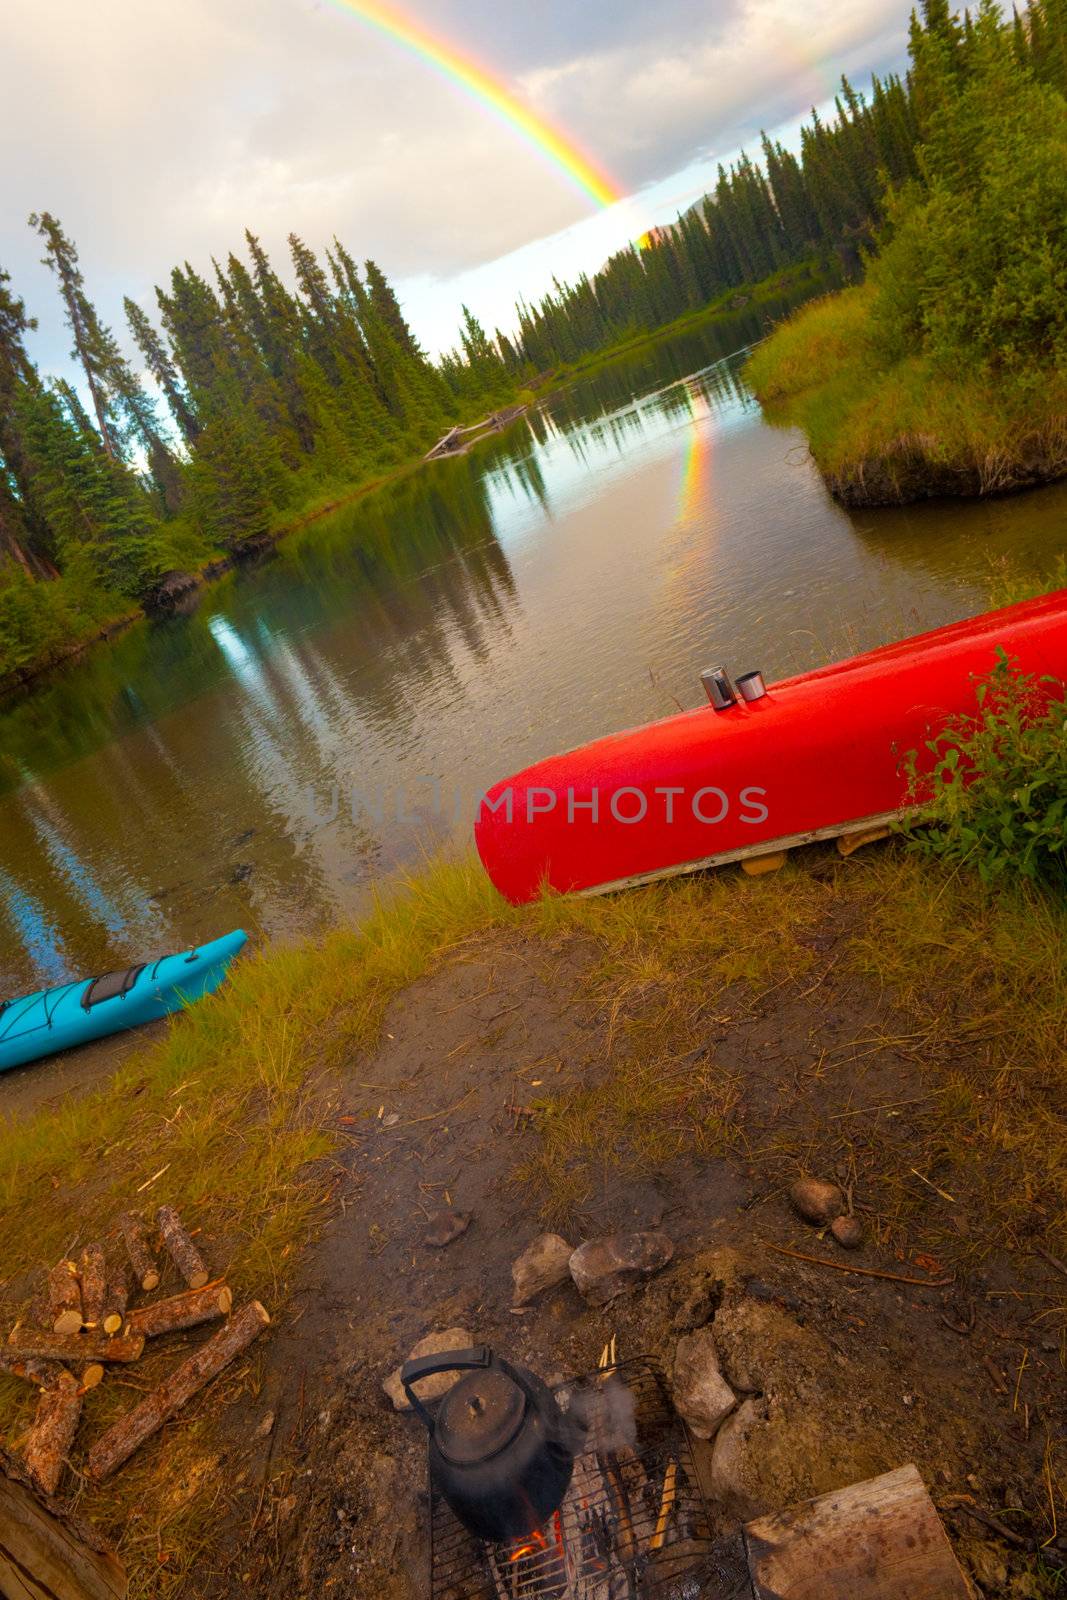 Overturned canoe and campfire under bright rainbow